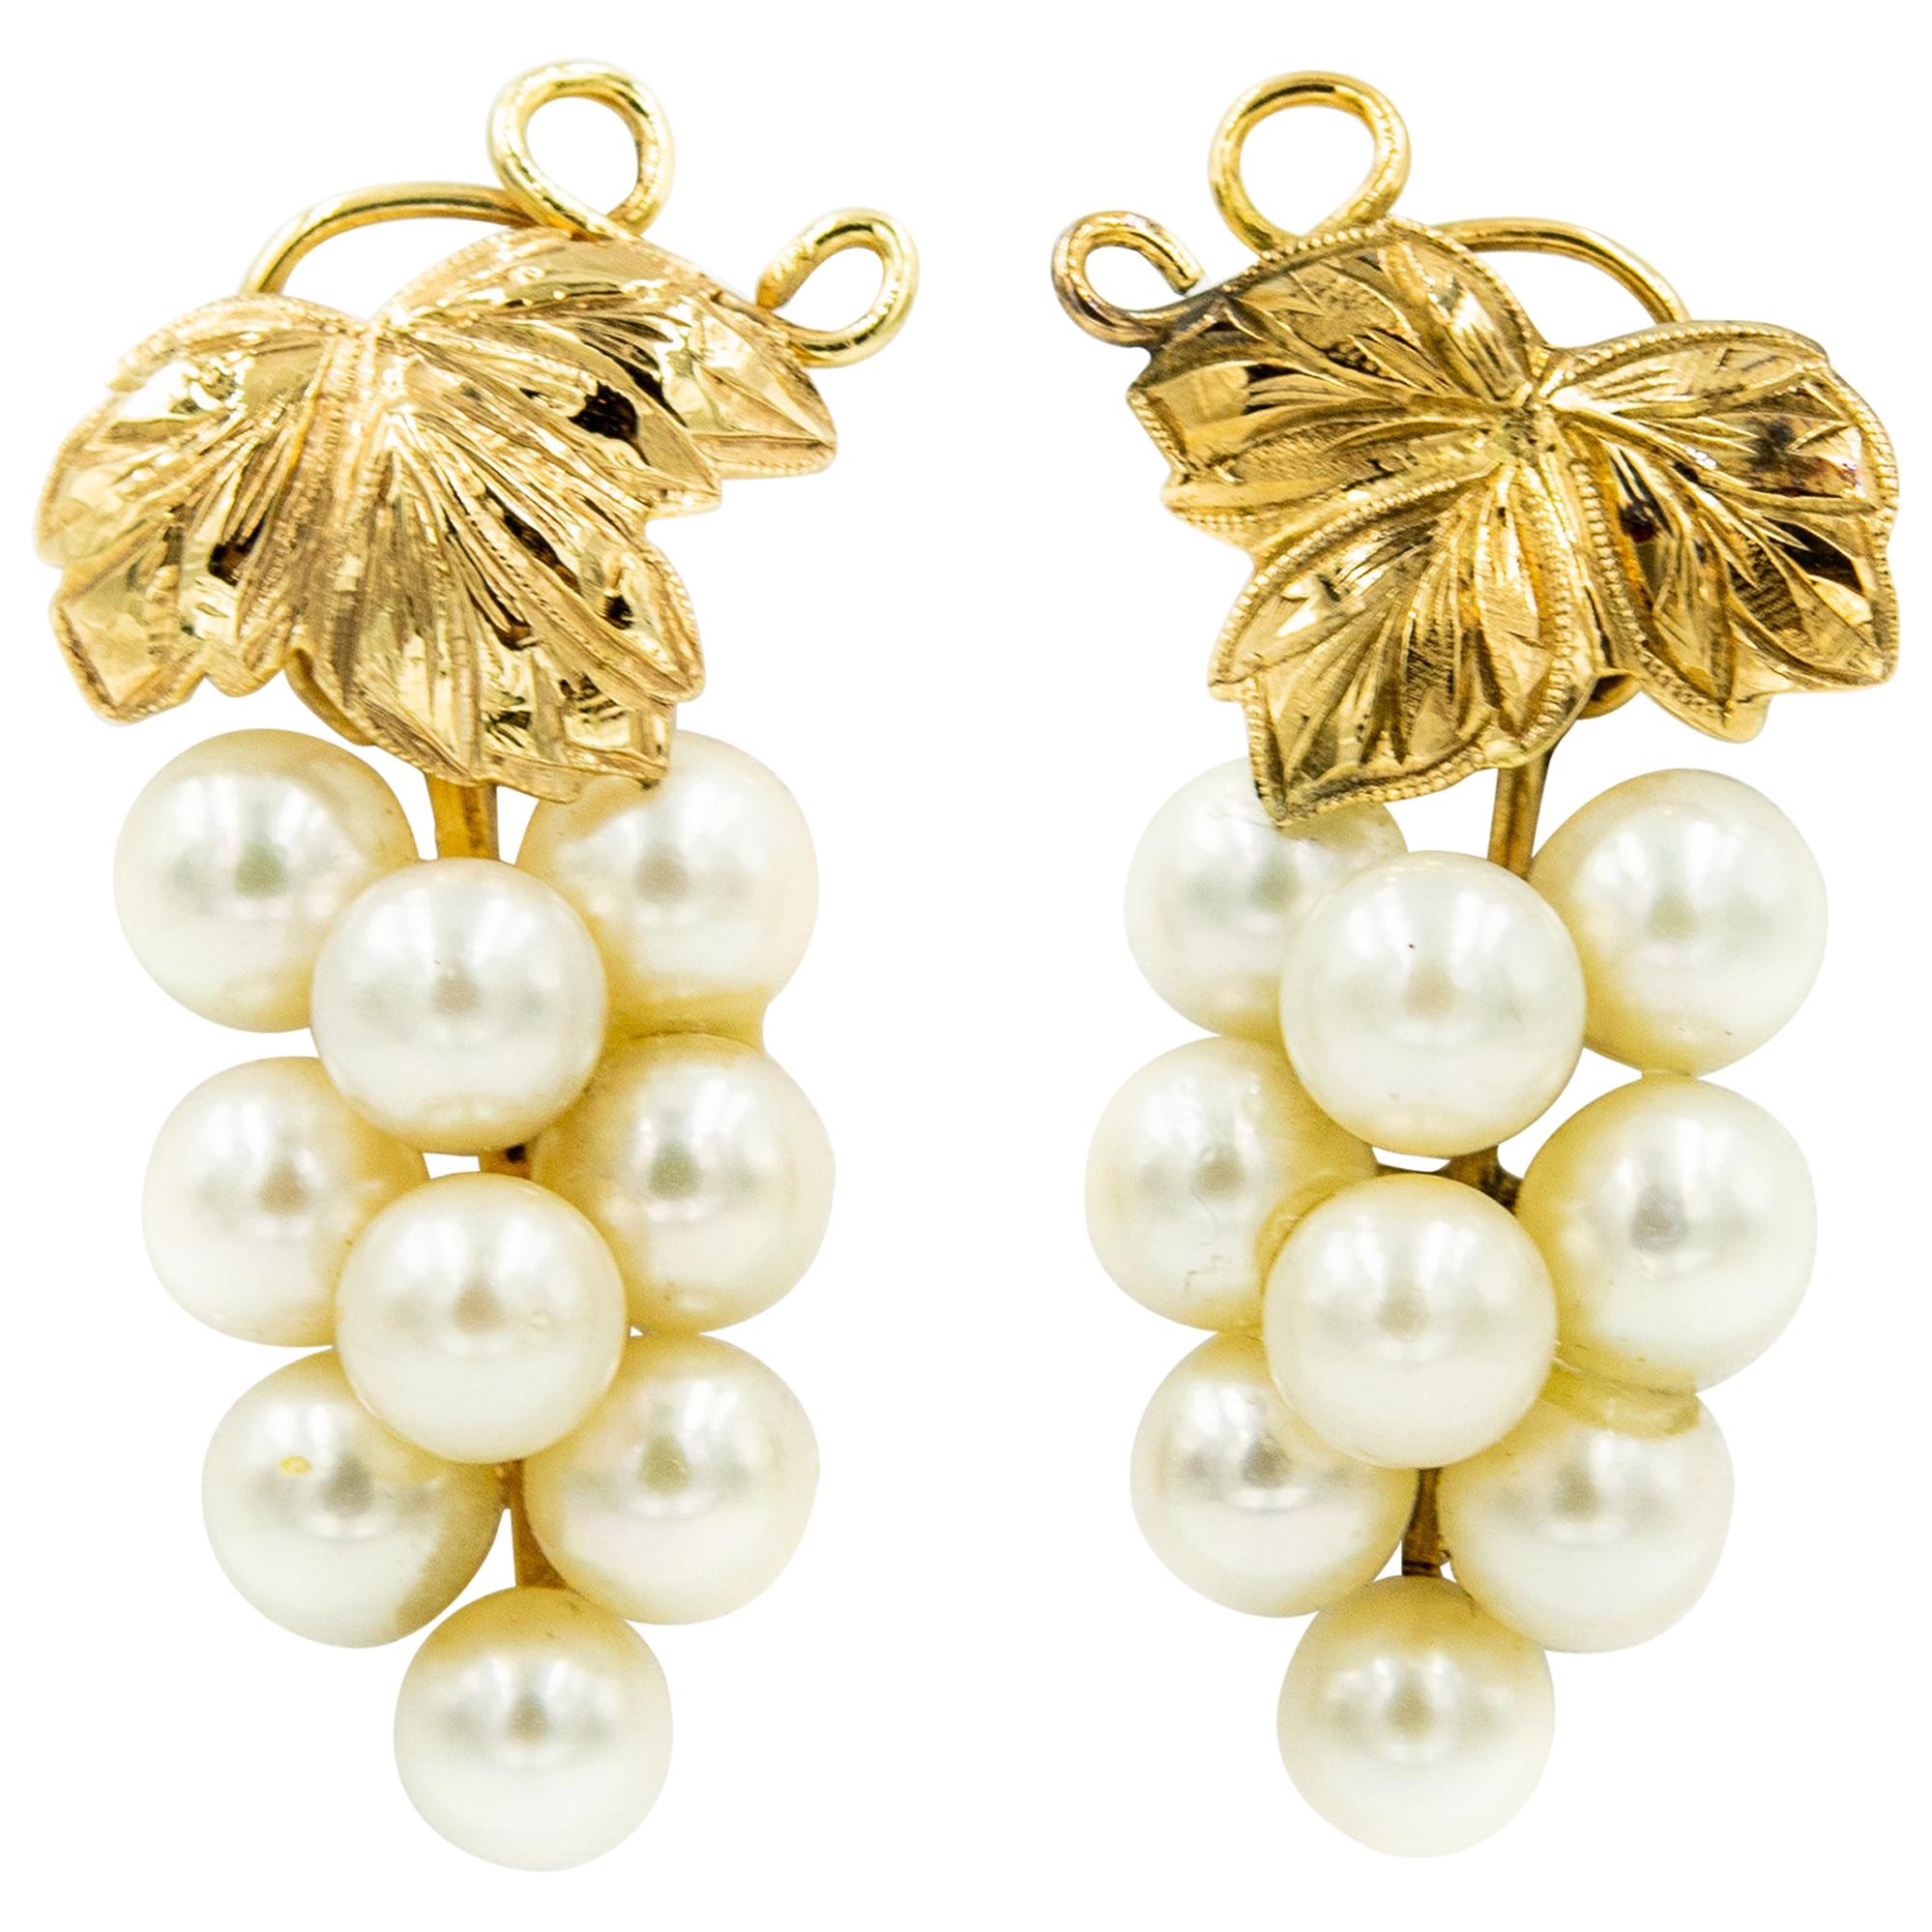 White pearl cluster earrings Jewellery Earrings Cluster Earrings Pearl grape earrings 